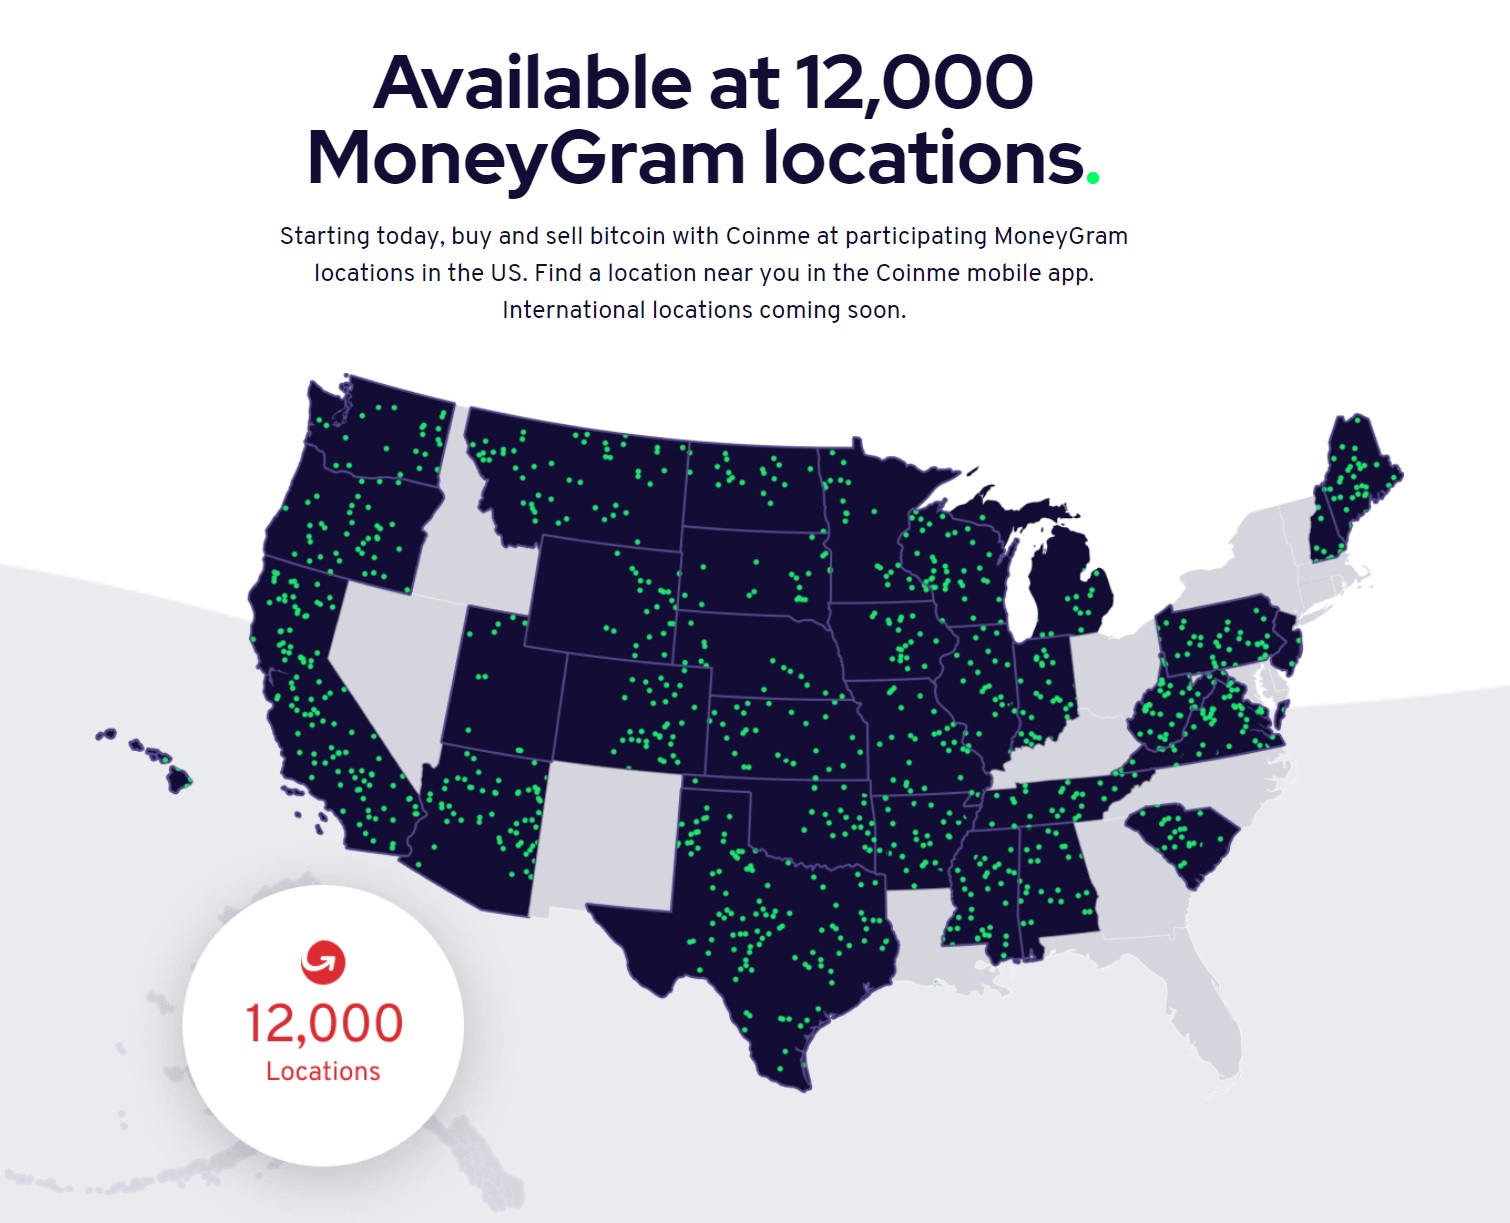 moneygram locations in